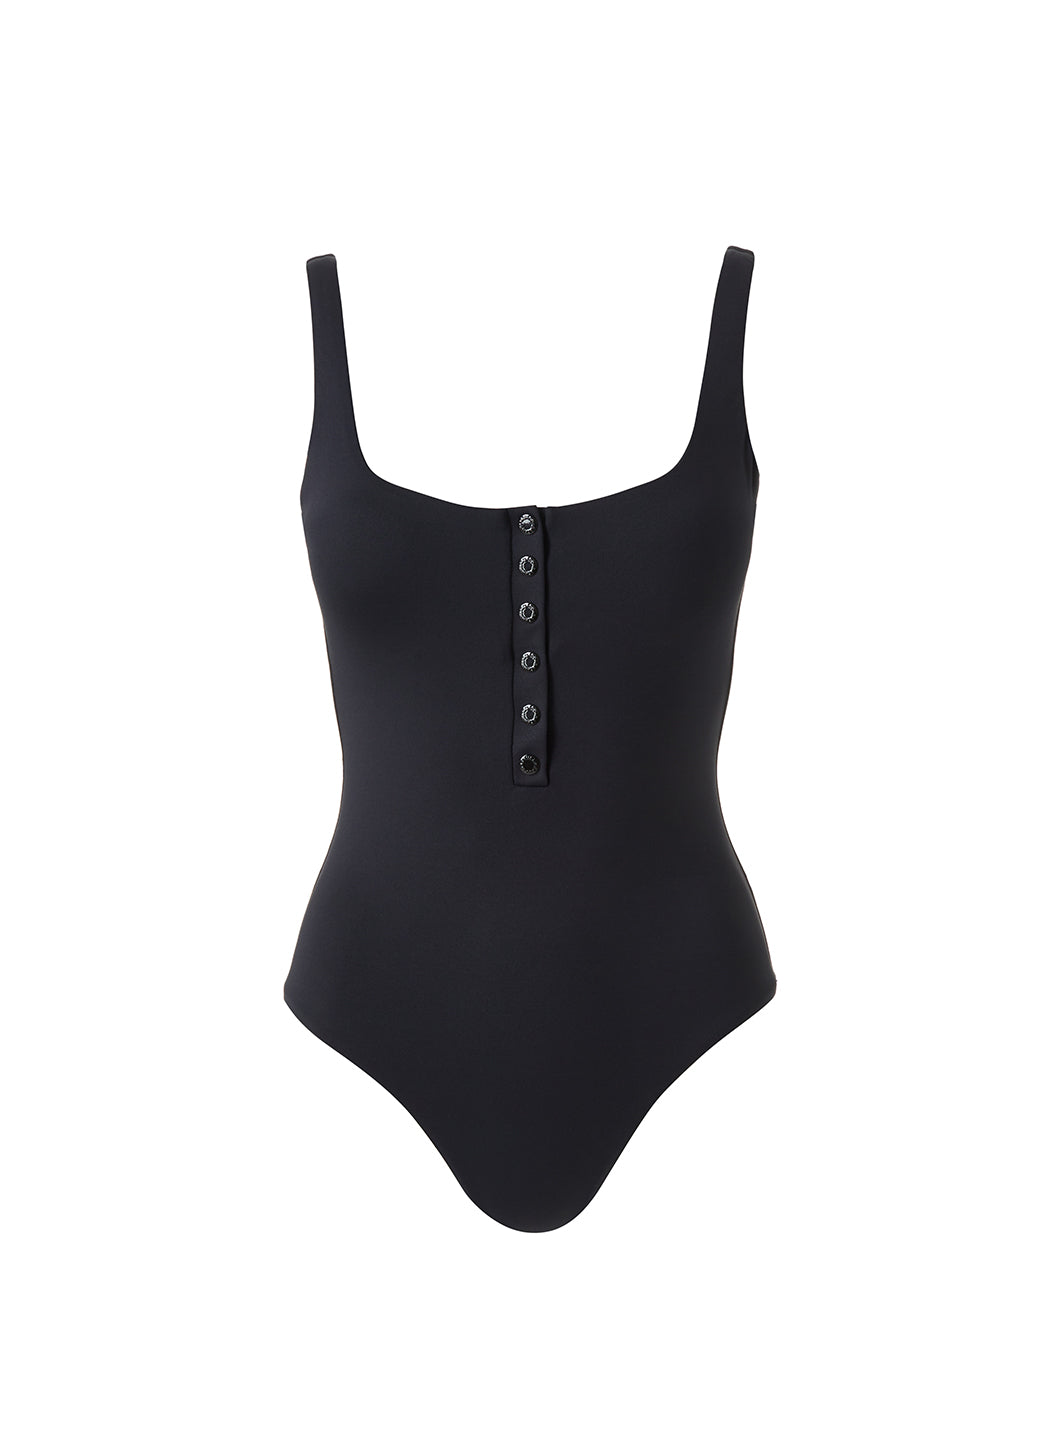 Taormina Black Swimsuit